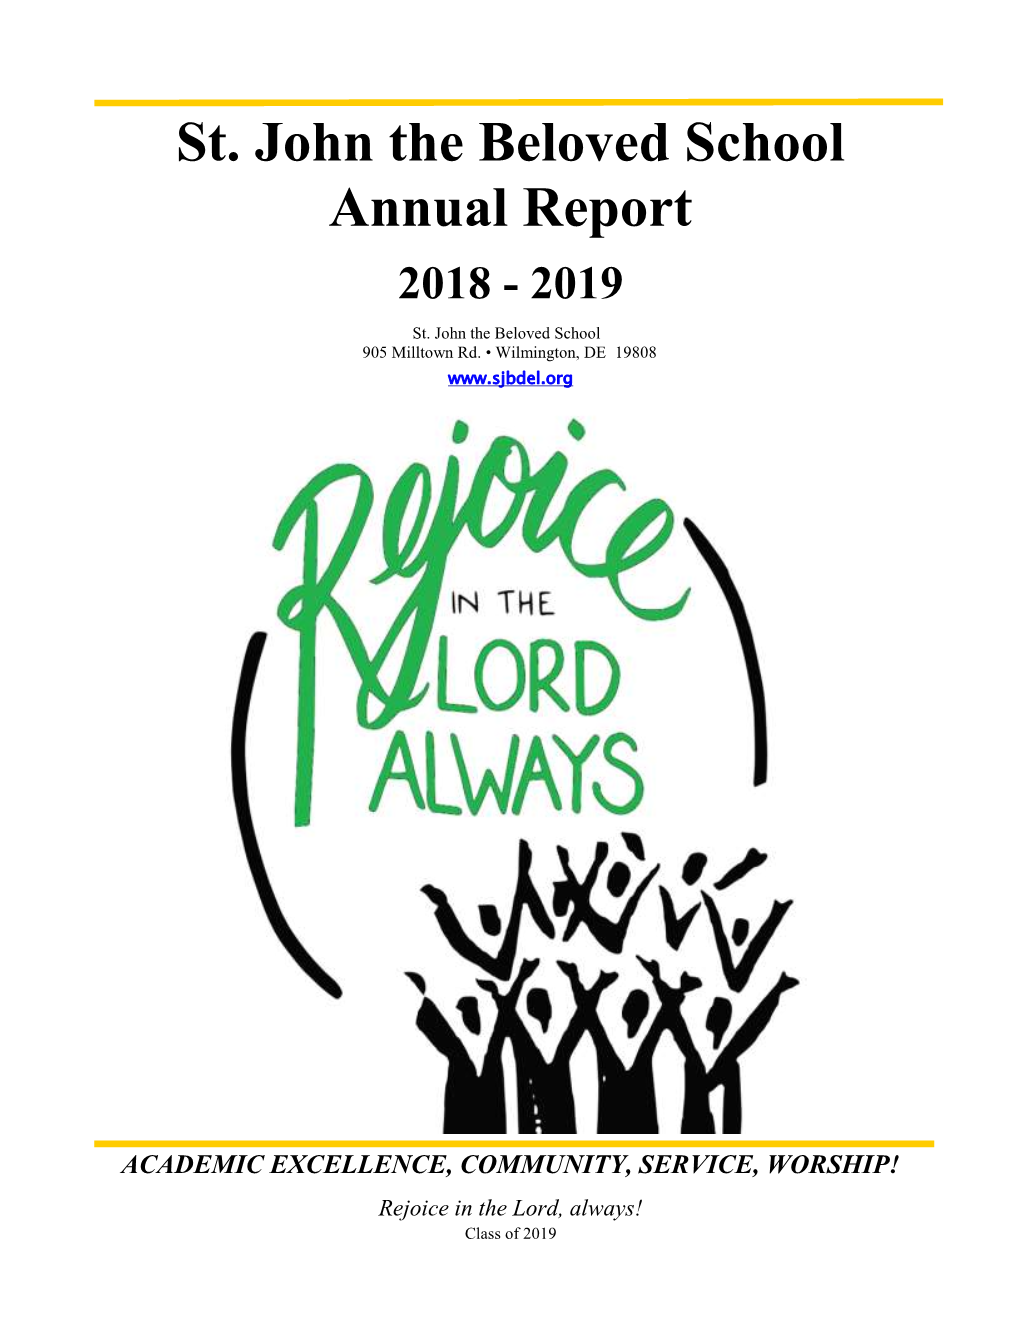 St. John the Beloved School Annual Report